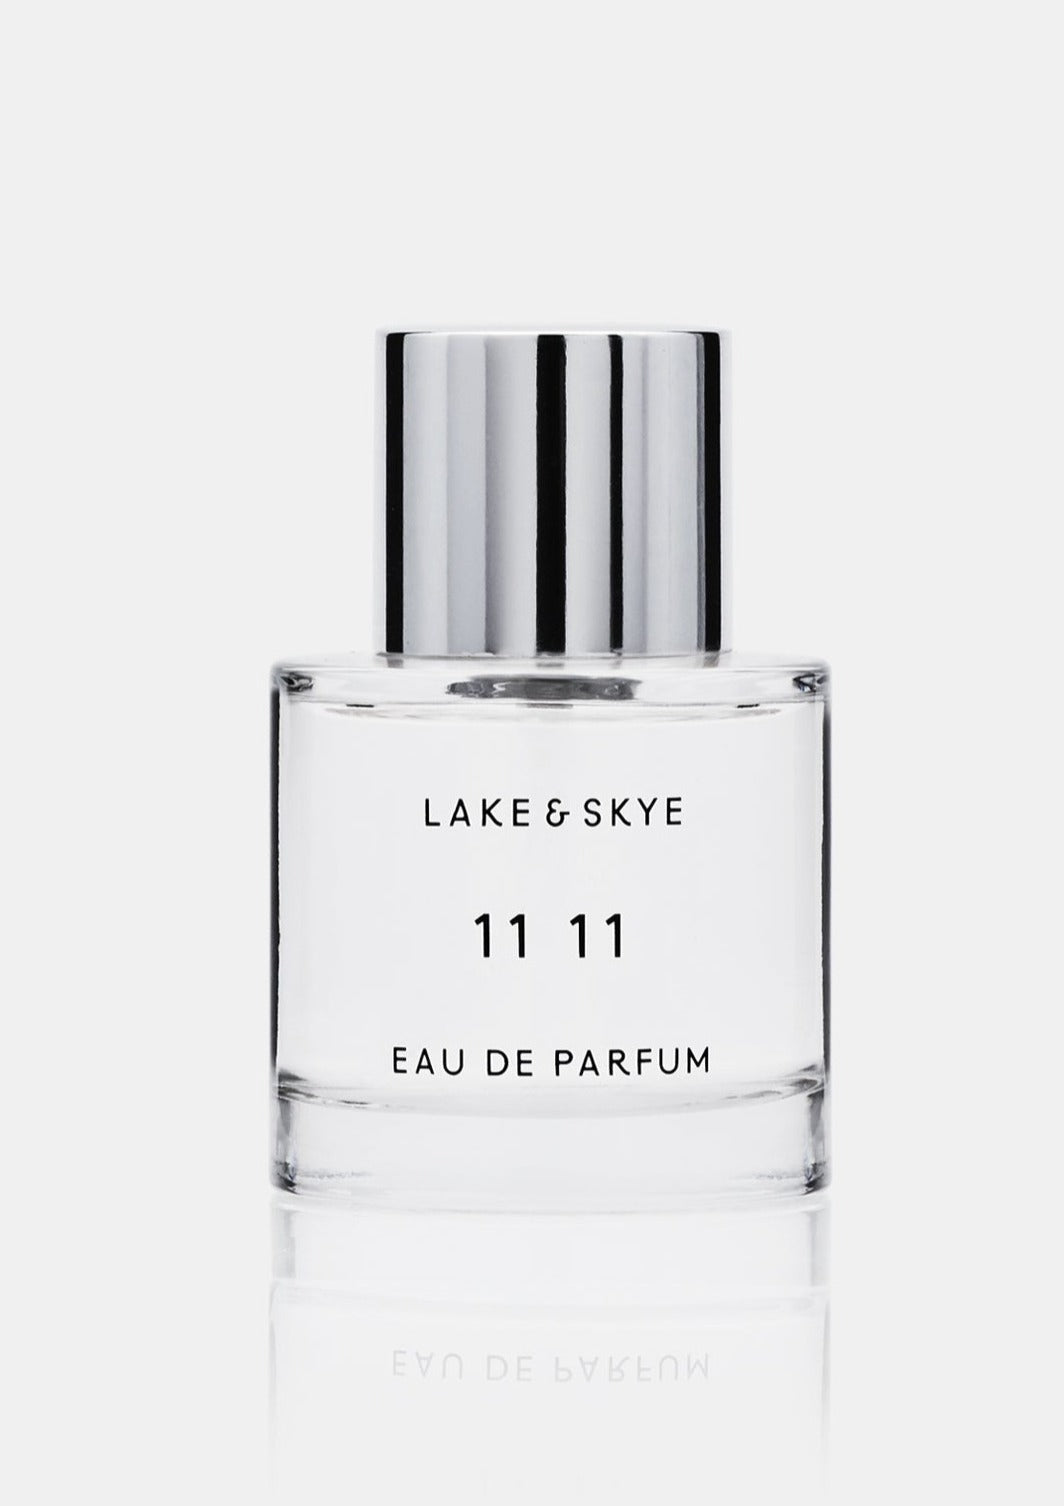 11 11 EAU DE PARFUM by LAKE & SKYE